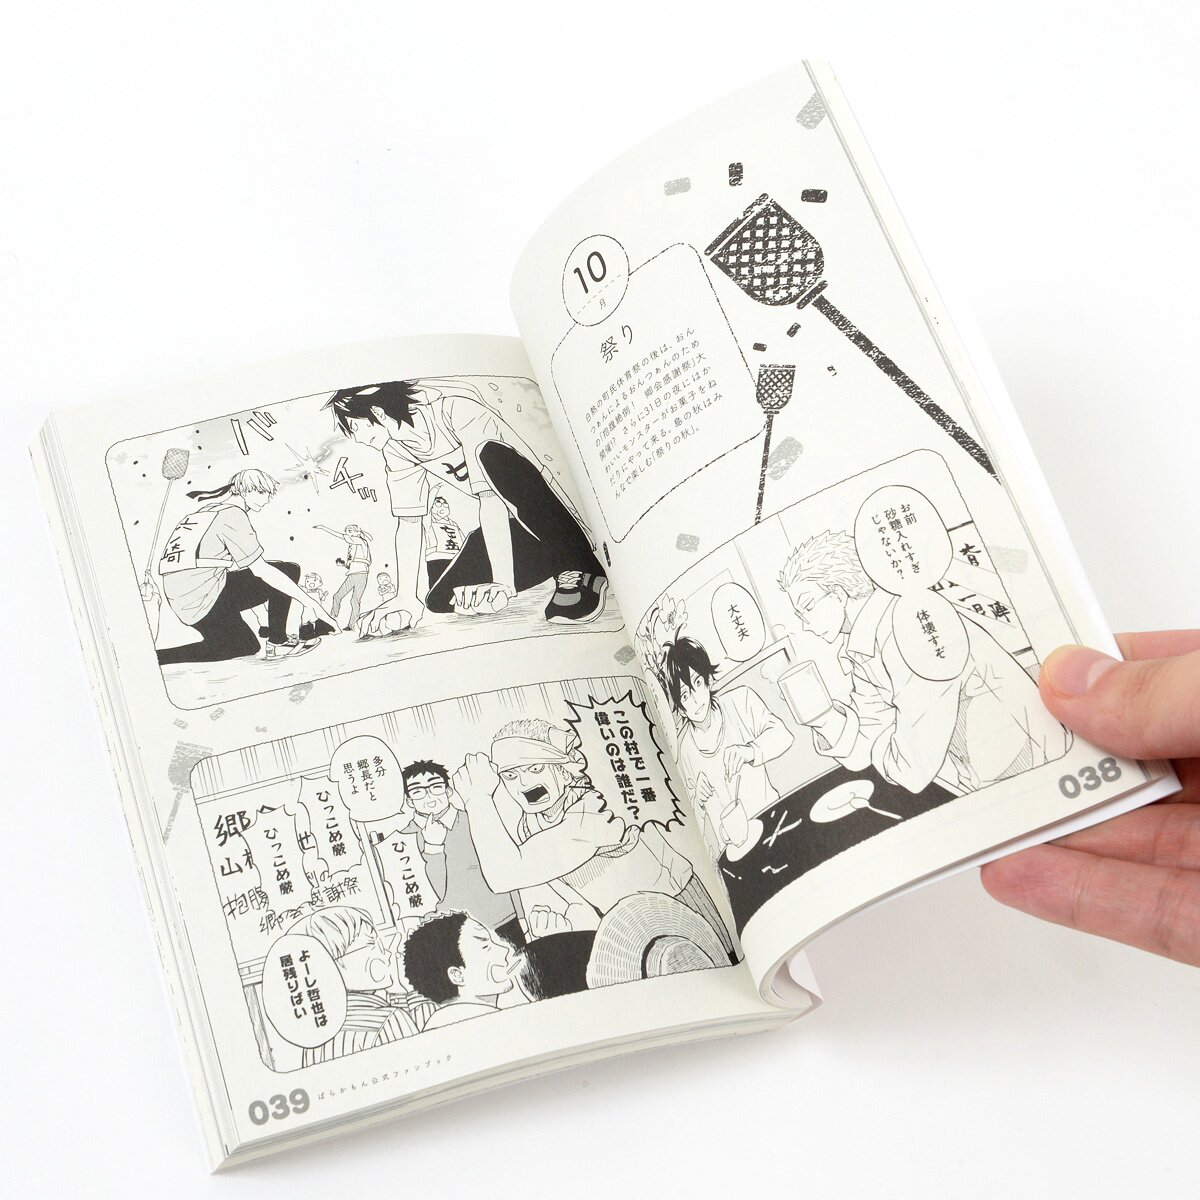 Barakamon Official Fan Book - Tokyo Otaku Mode (TOM)